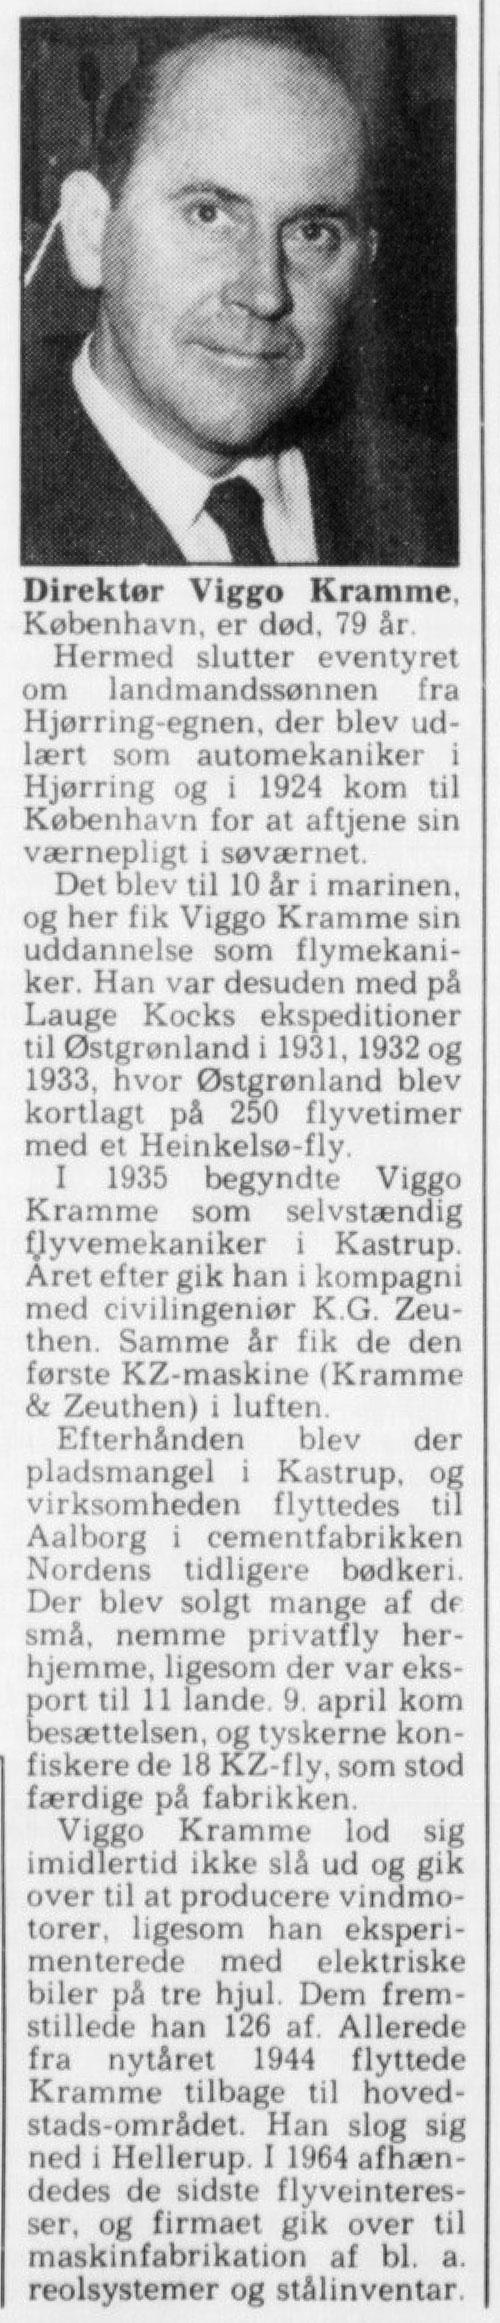 Nekrolog over Viggo Kramme i Aalborg Stiftstidende, 24. august 1984, s. 10.